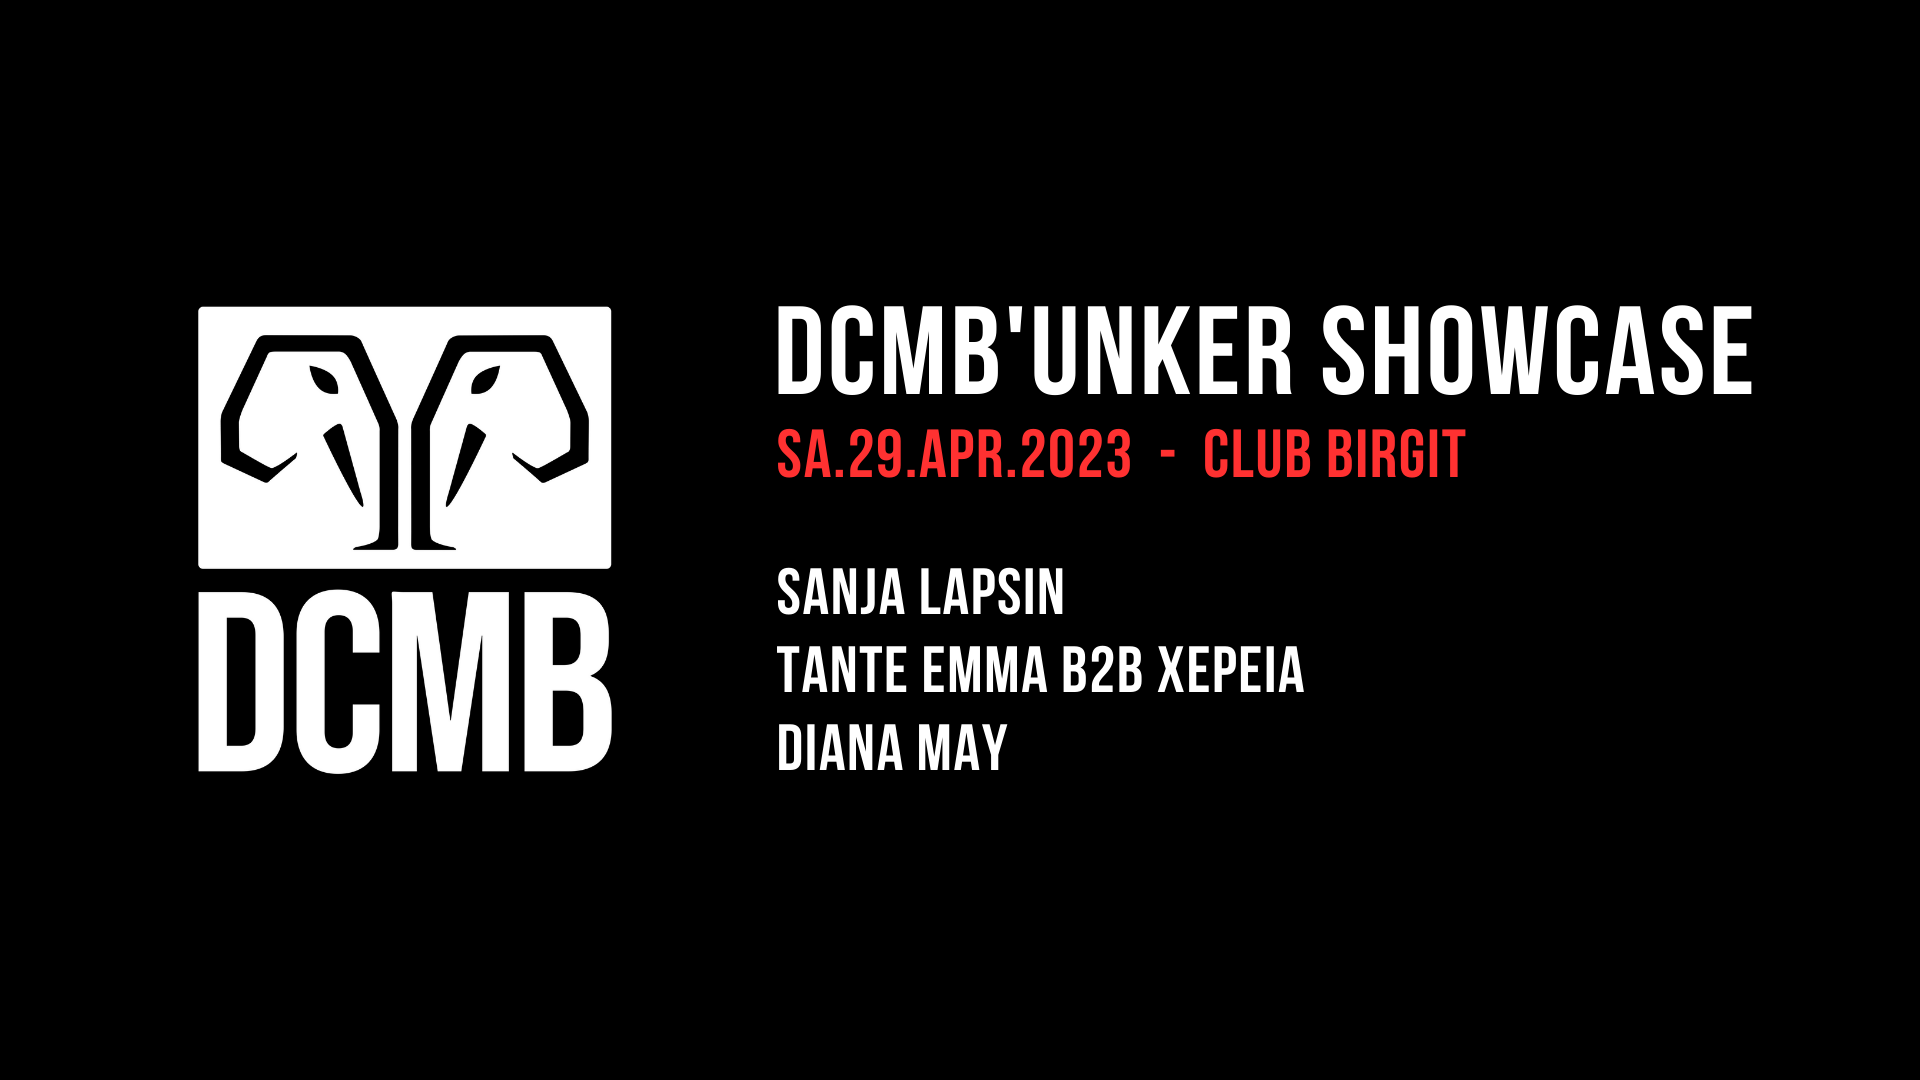 DCMB'unker Showcase - フライヤー表